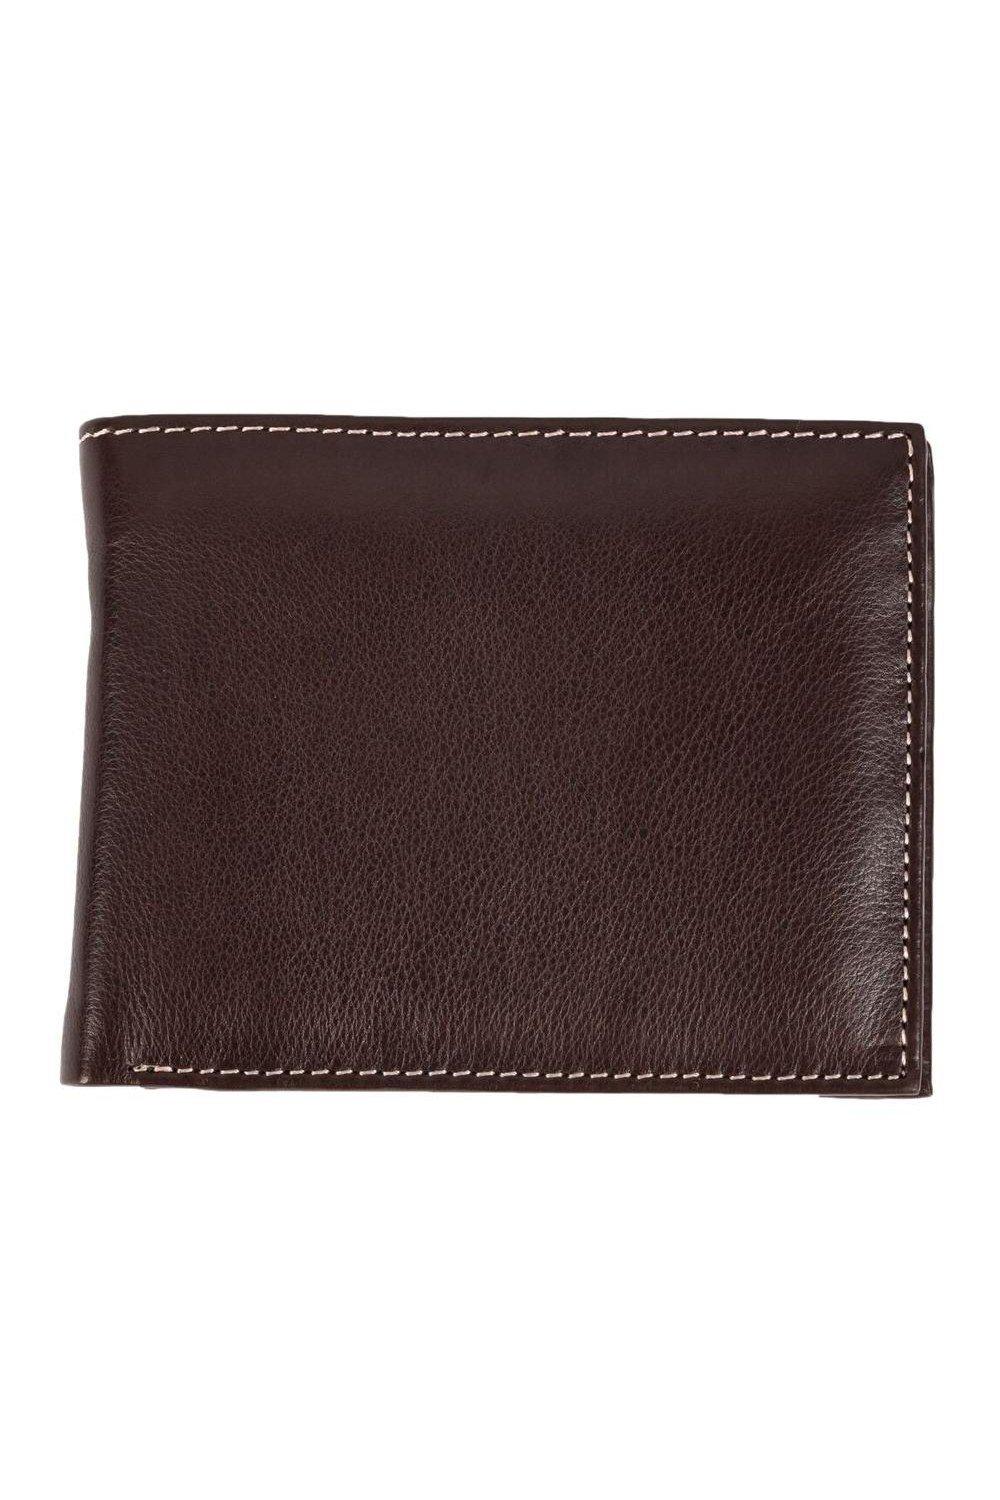 Кошелек Mark Trifold с карманом для монет Eastern Counties Leather, коричневый